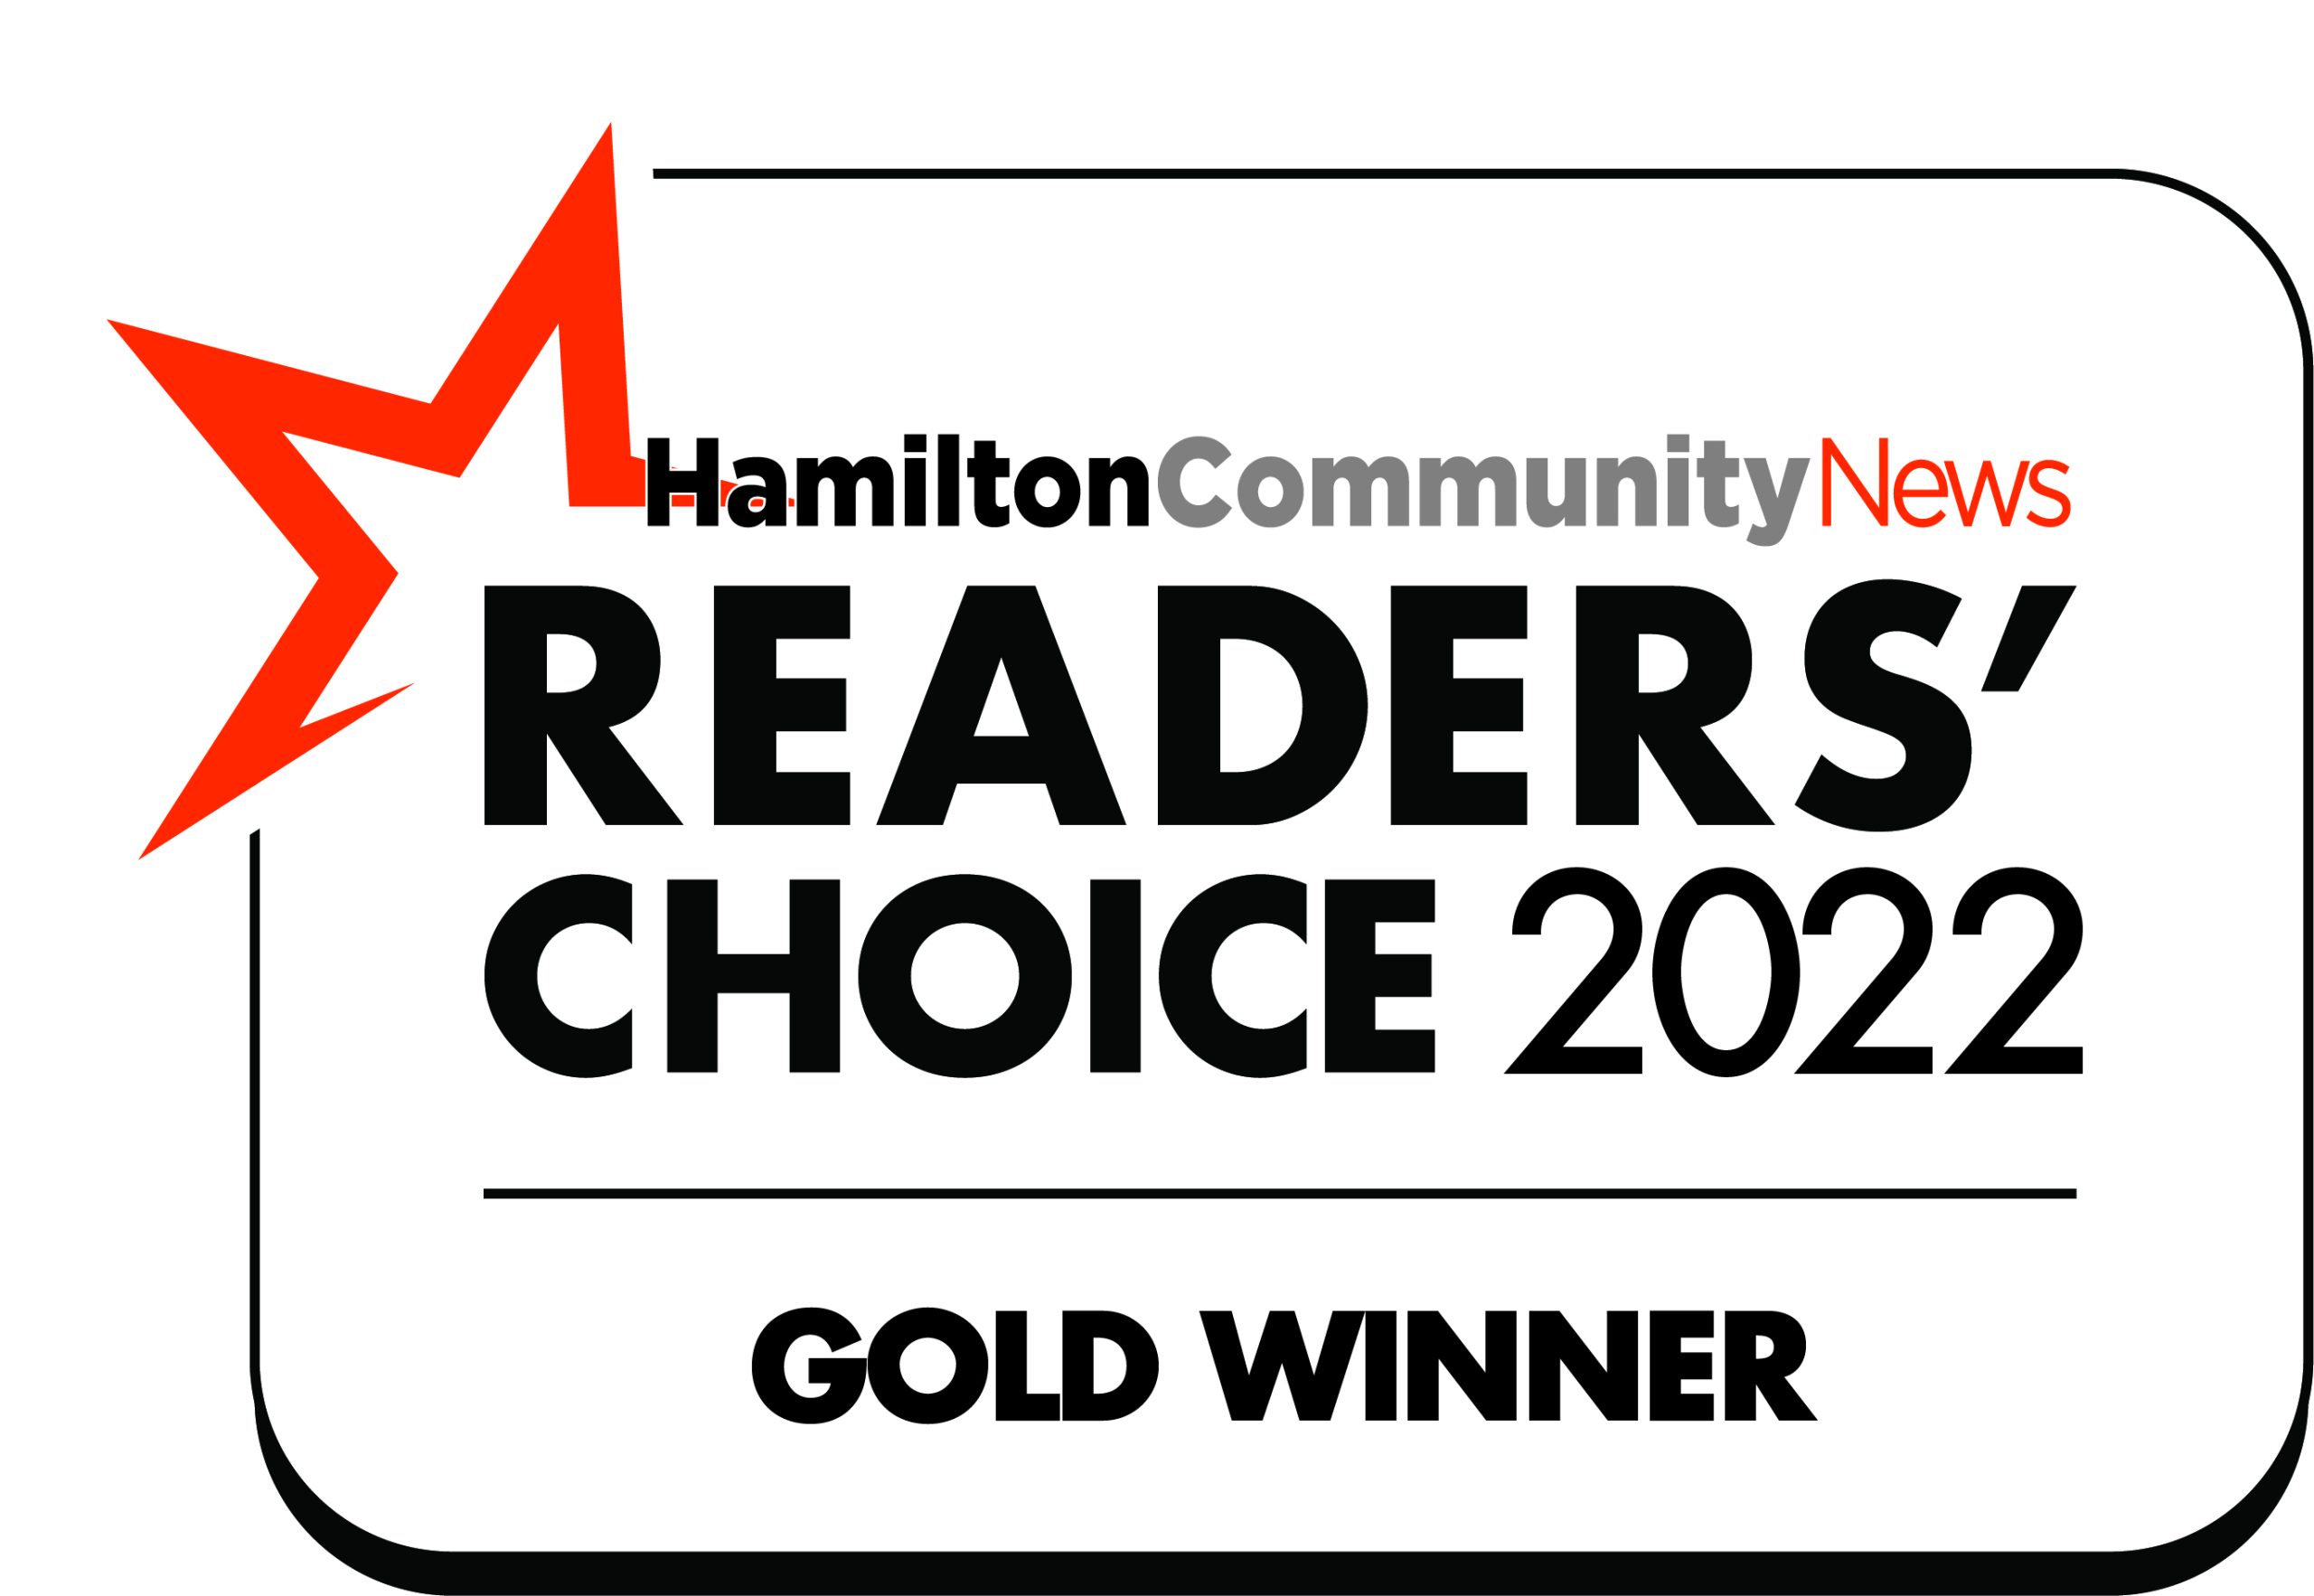 Readers Choice 2022 Gold Winner Award - Hamilton Community News